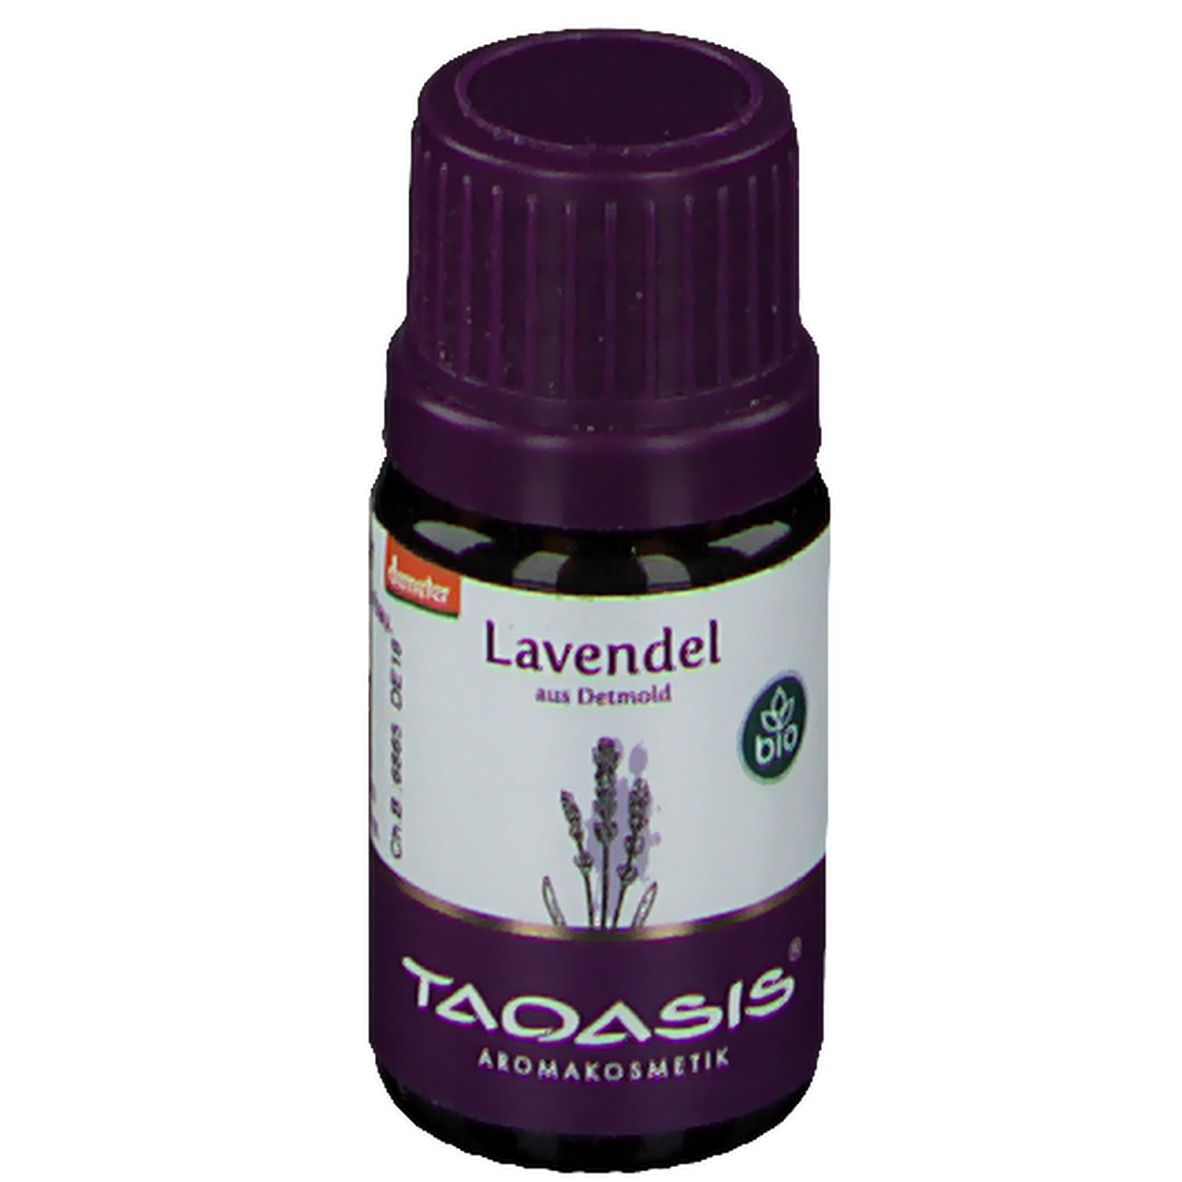 TAOASIS® Lavendel fein Bio 10 % in demeter Jojobaöl